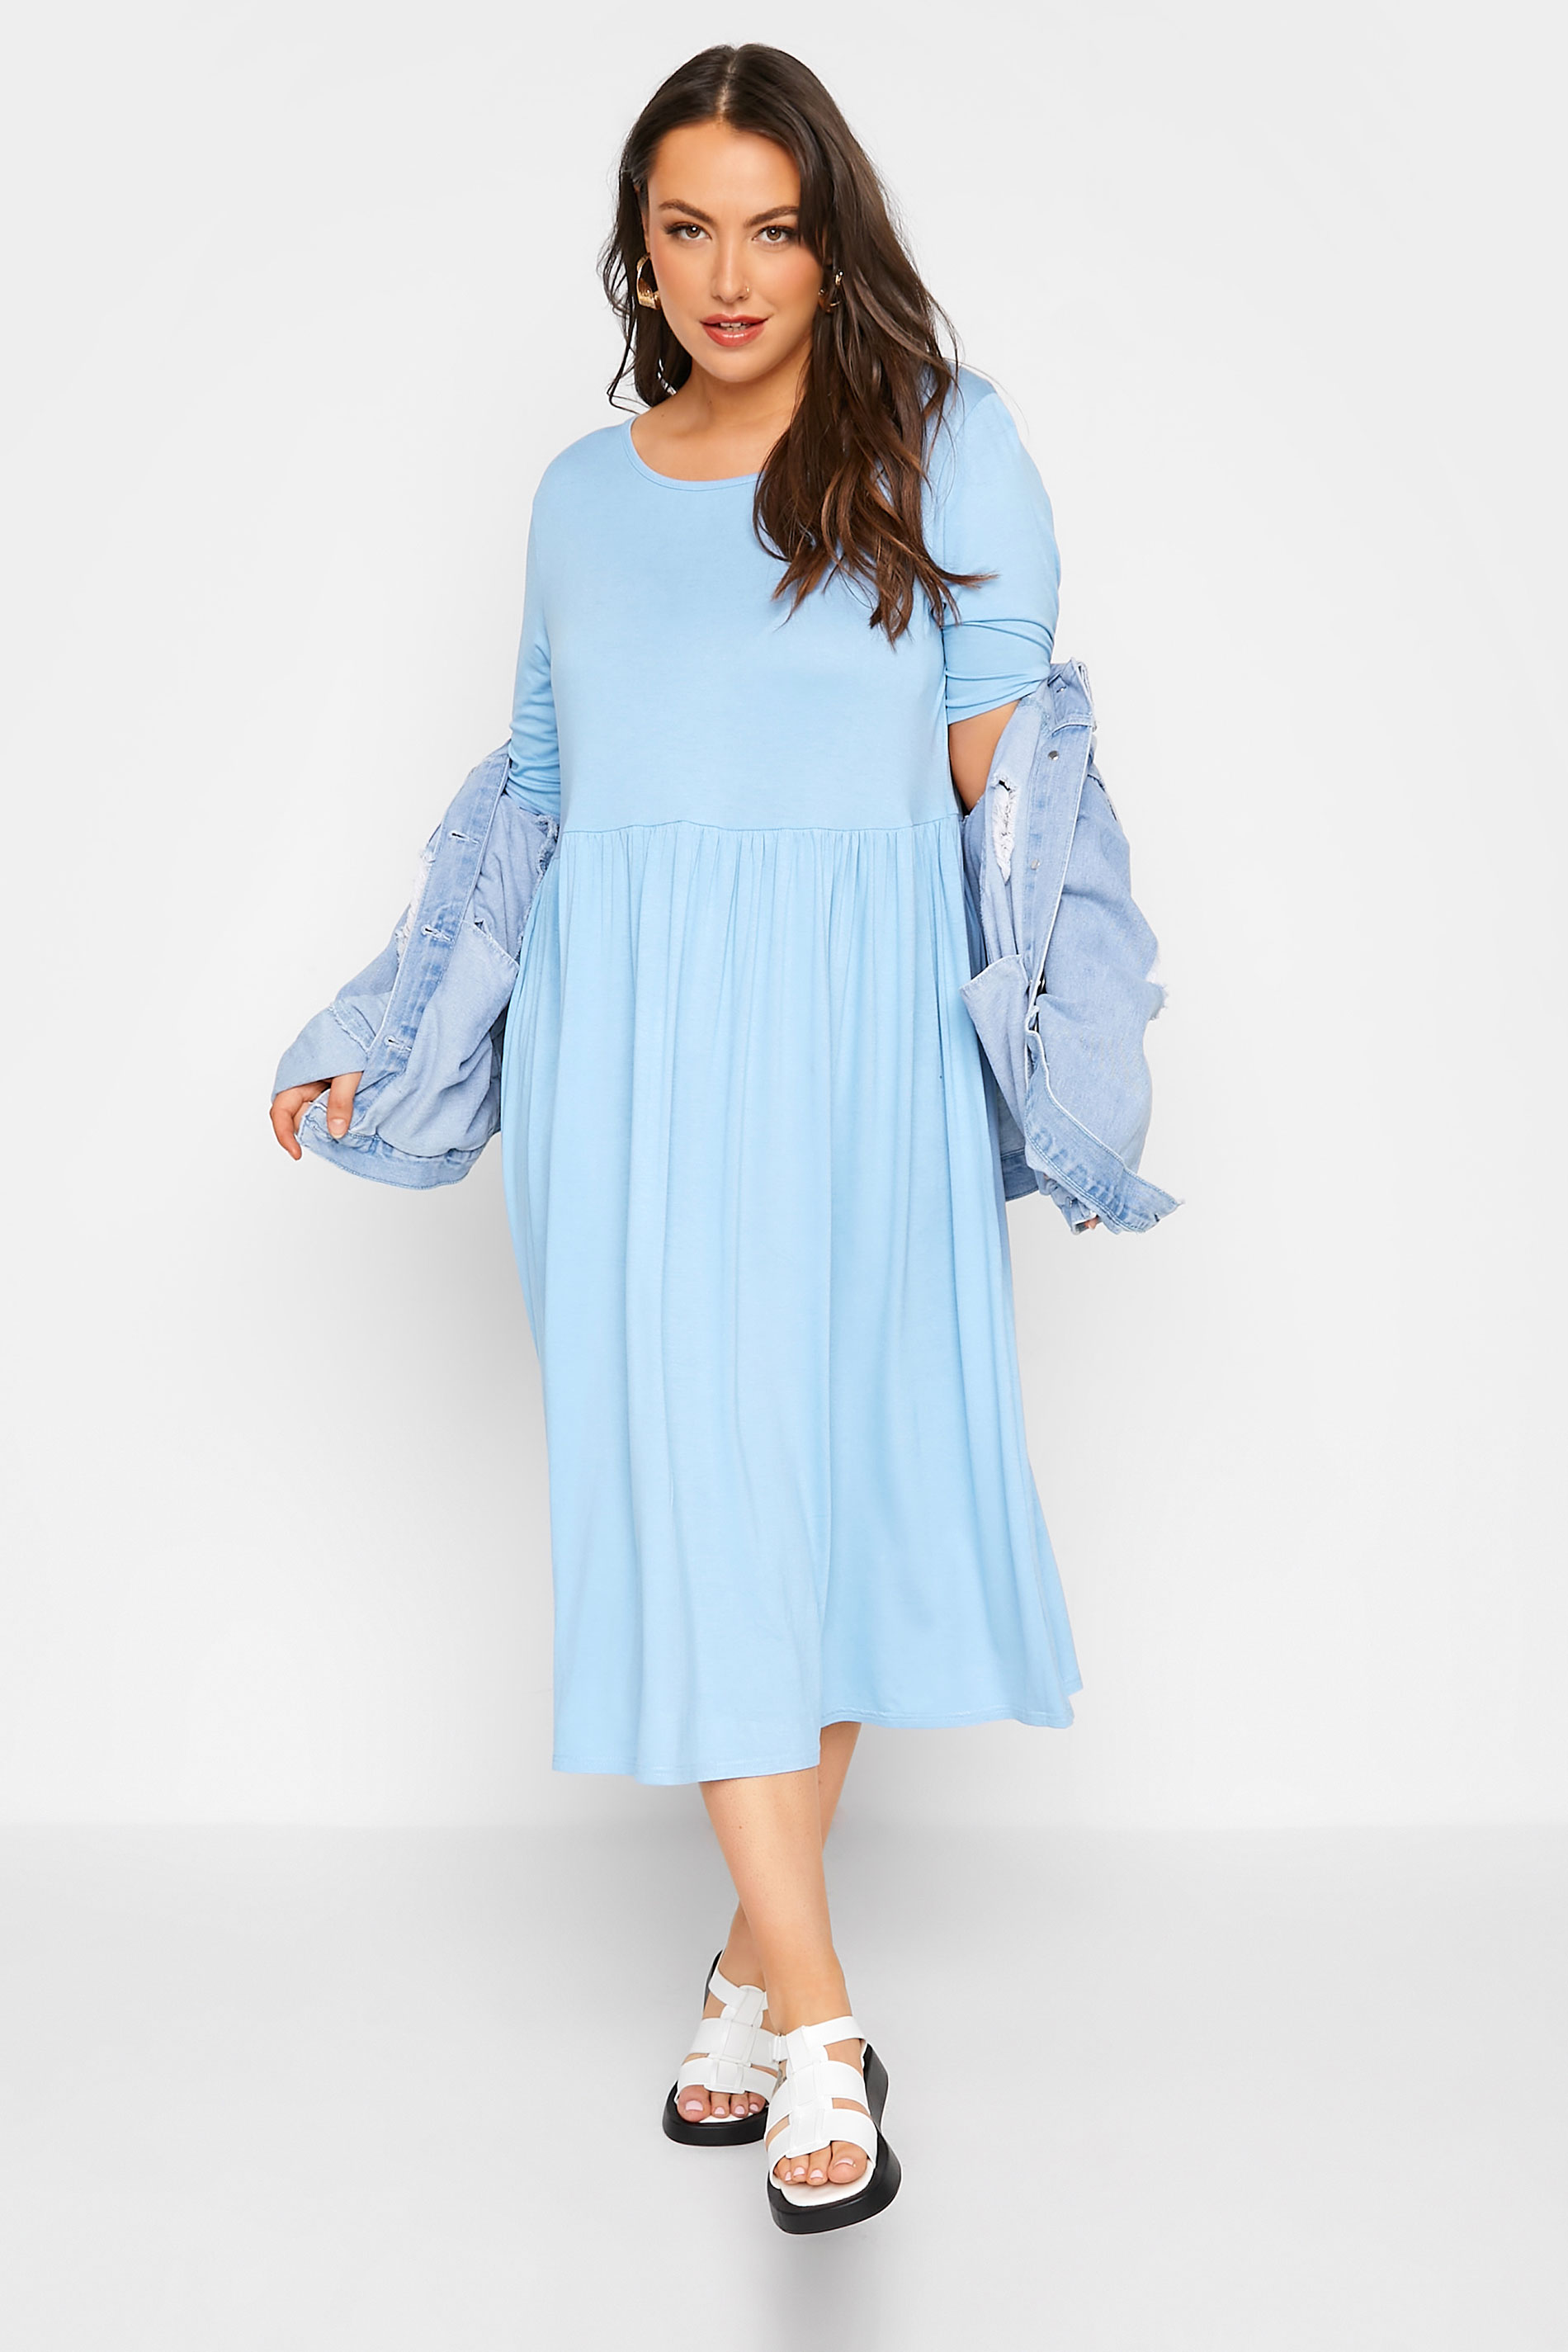 Robes Grande Taille Grande taille  Robes Smocké | LIMITED COLLECTION - Robe Midi Bleue Ciel Design Uni - FS30184